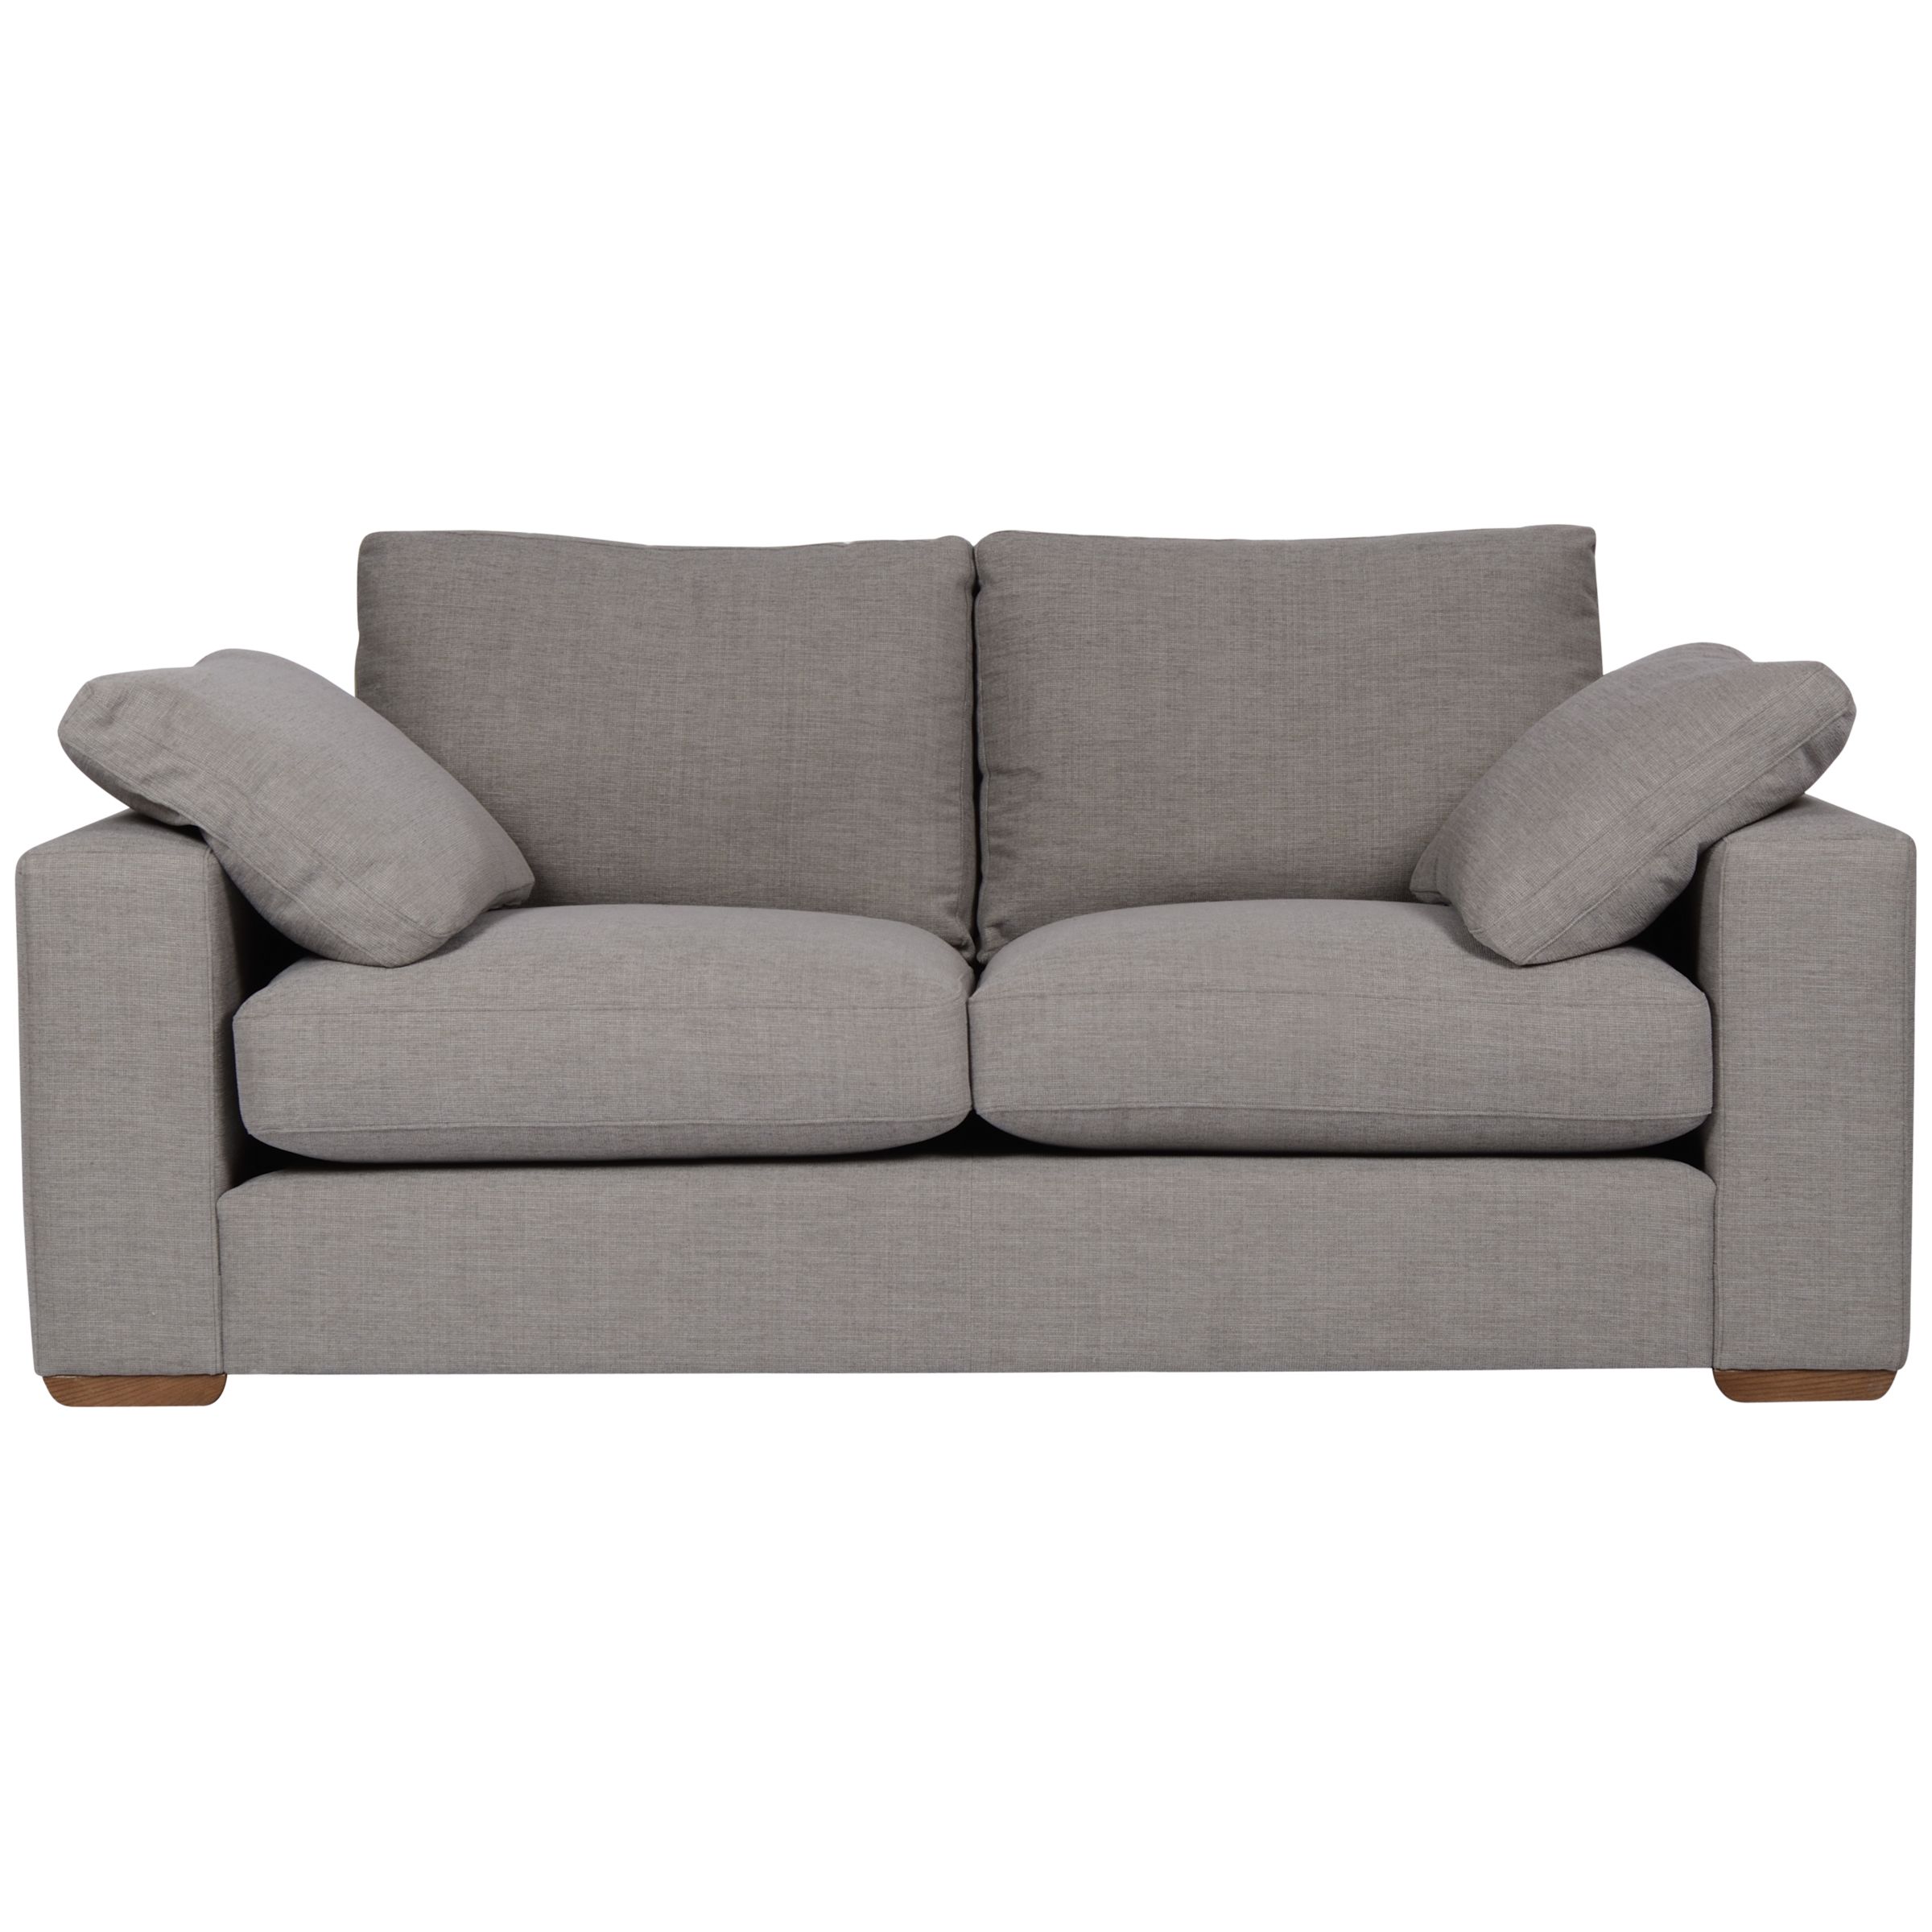 John Lewis Options Slim Arm Medium Sofa, Barnby, Light Leg, width 183cm